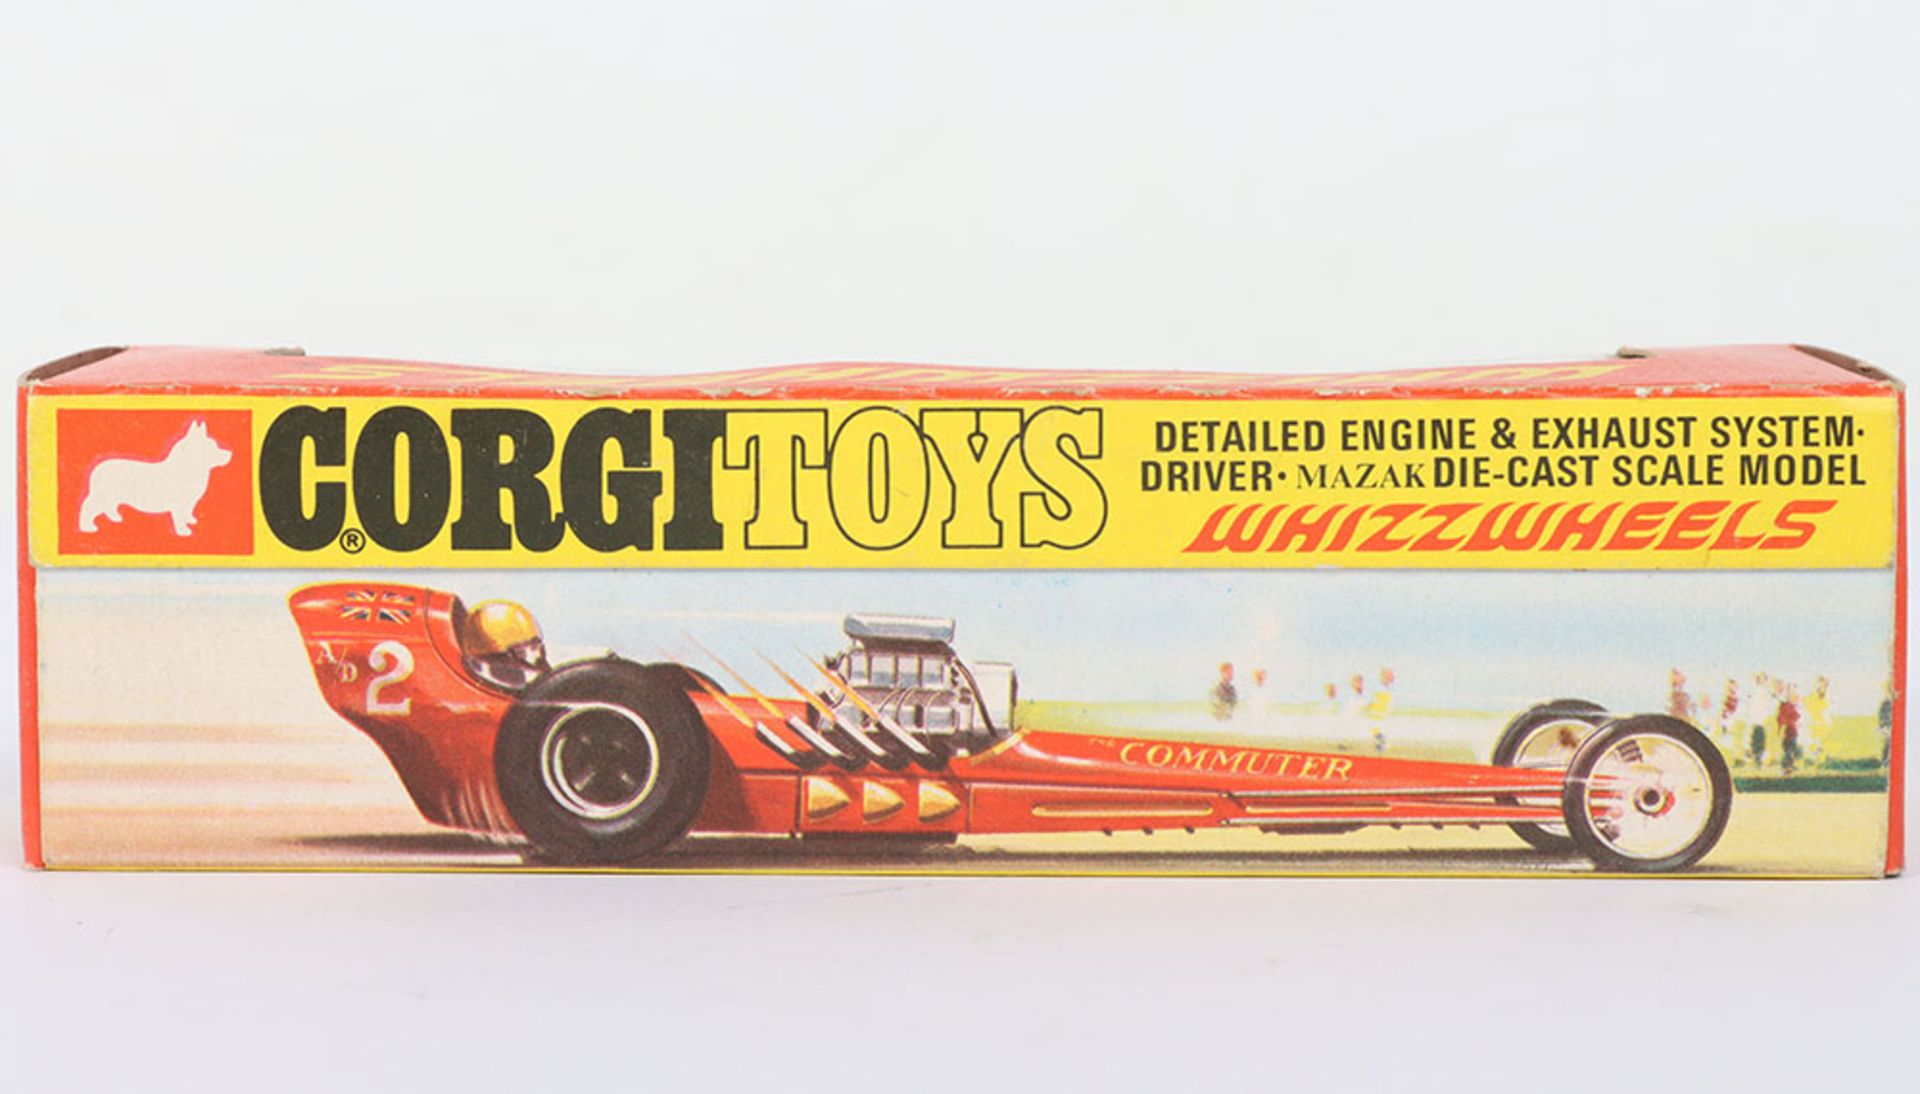 Corgi Toys 161 Santa Pod Raceways Commuter Dragster - Image 2 of 3